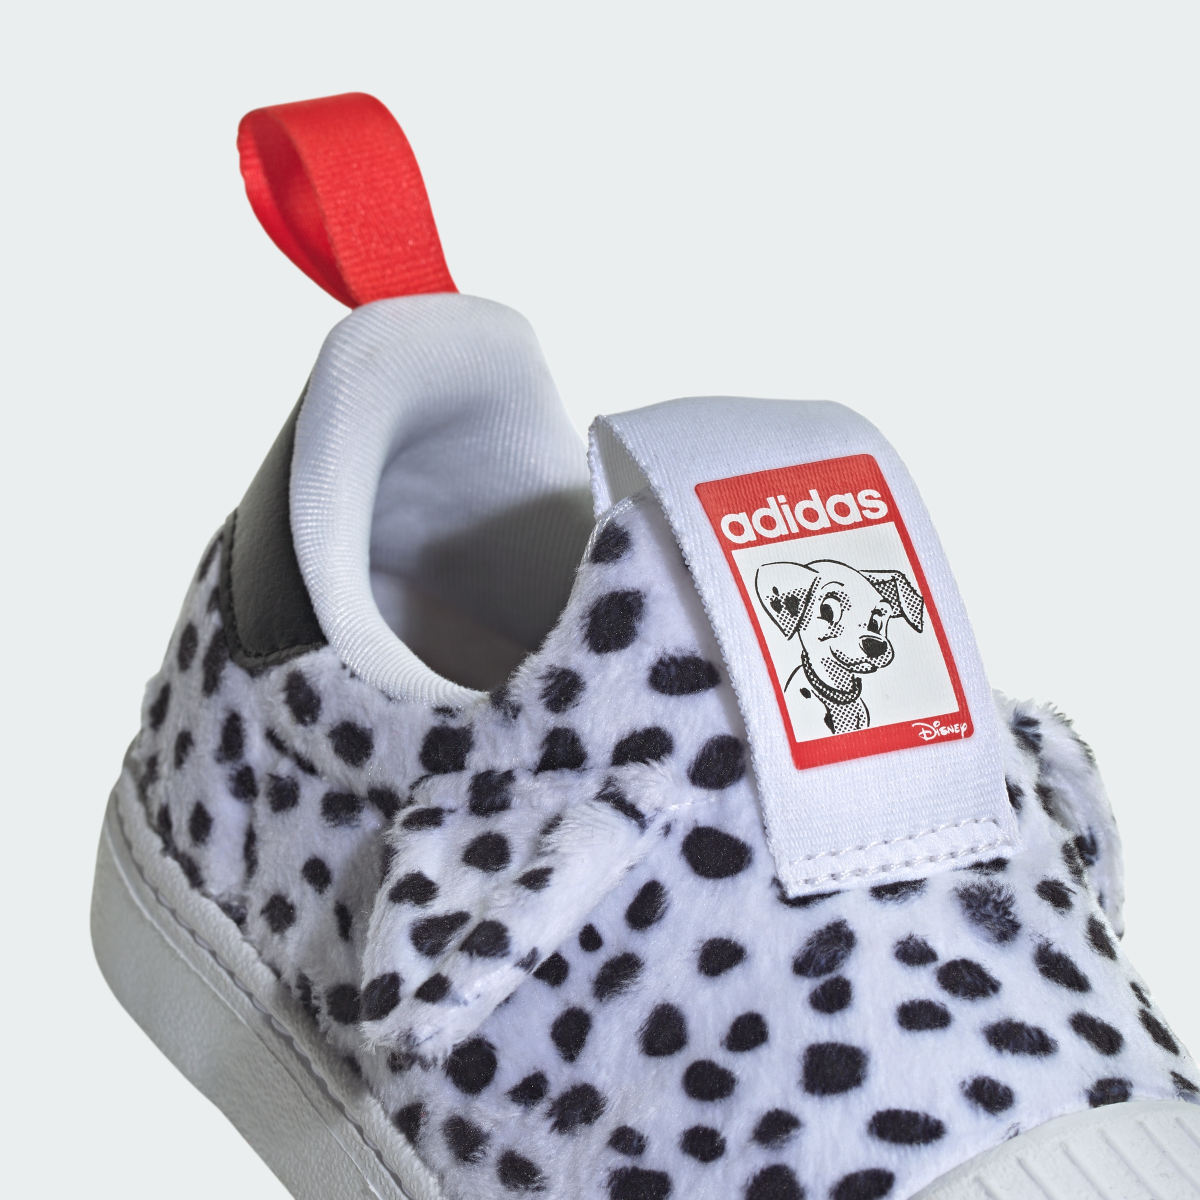 Adidas Scarpe adidas Originals x Disney 101 Dalmatians Superstar 360 Kids. 9